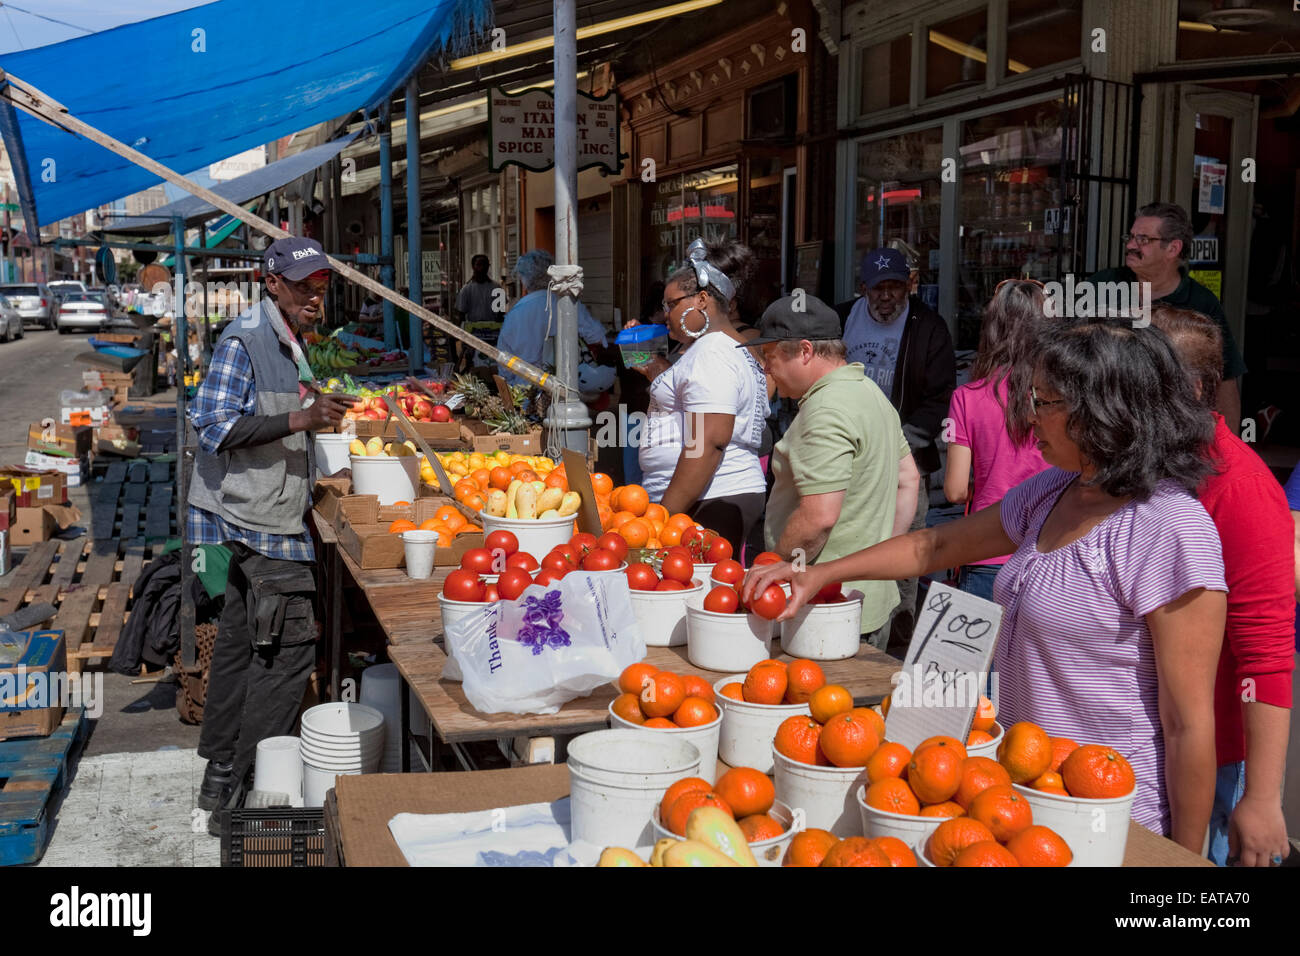 The Italian Market - 9th Street, Philadelphia, PA Stock Photo